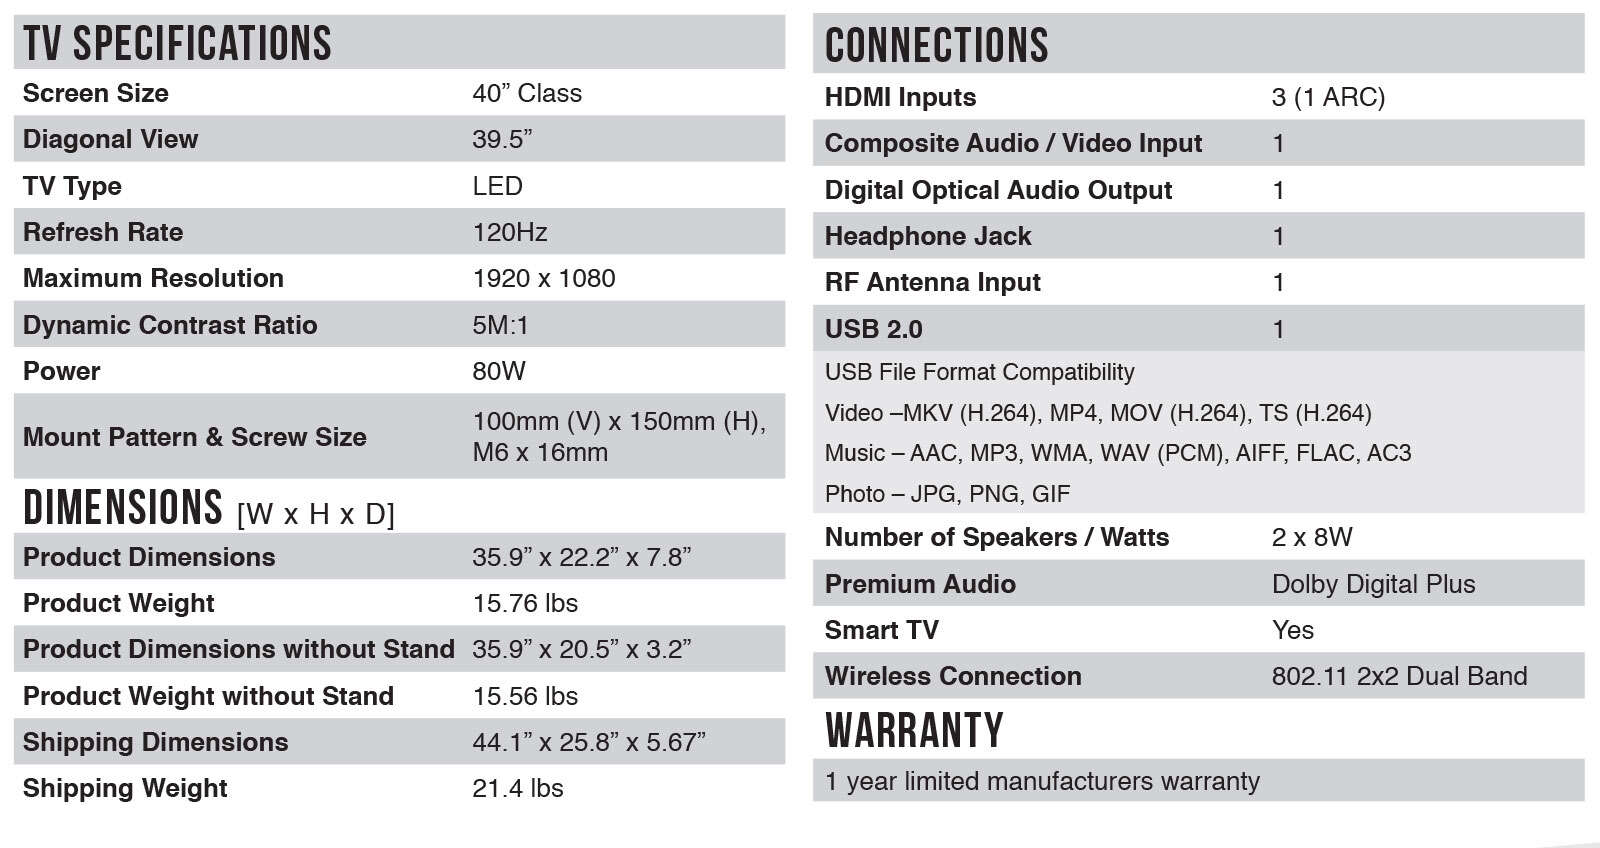 TCL 40” Class S-Series LED HDTV - 40FS3800 